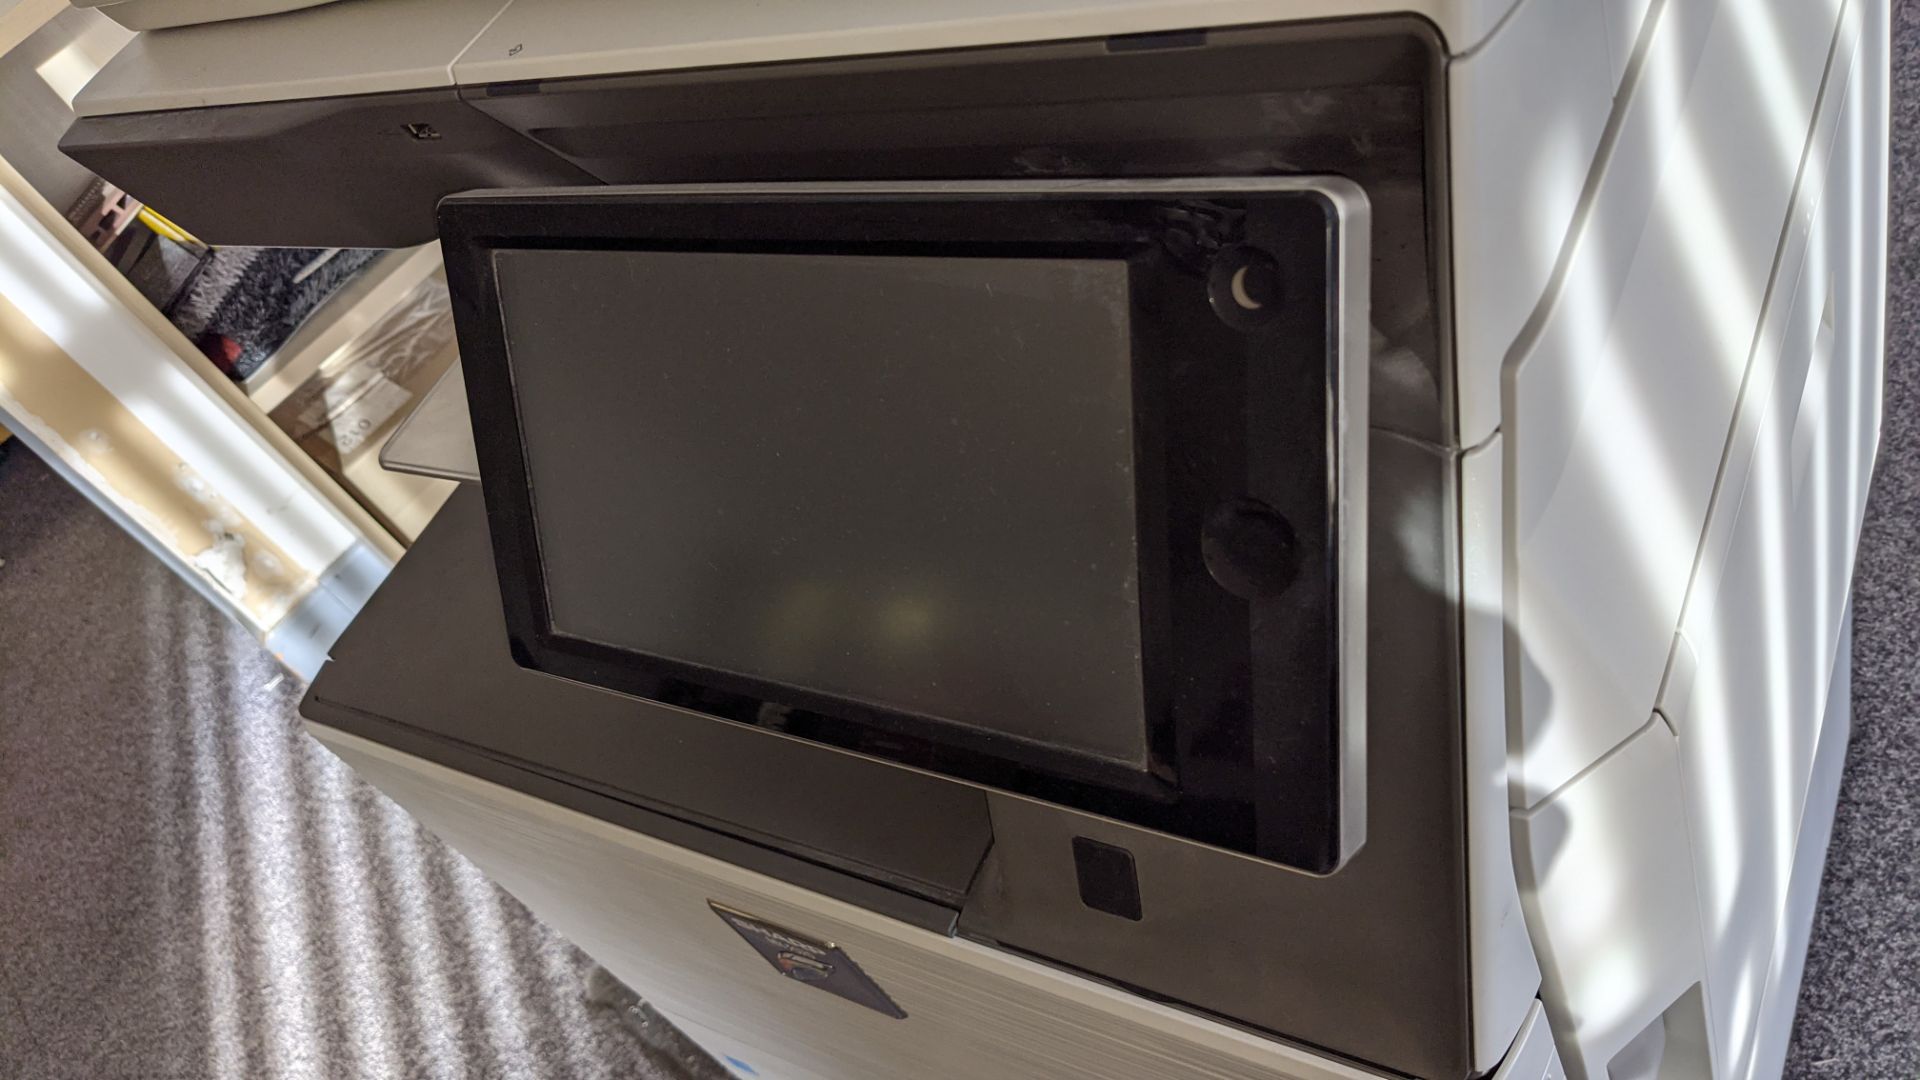 Sharp MX3070 floor standing copier with multi paper bins, touchscreen control, ADF, etc. - Image 9 of 13